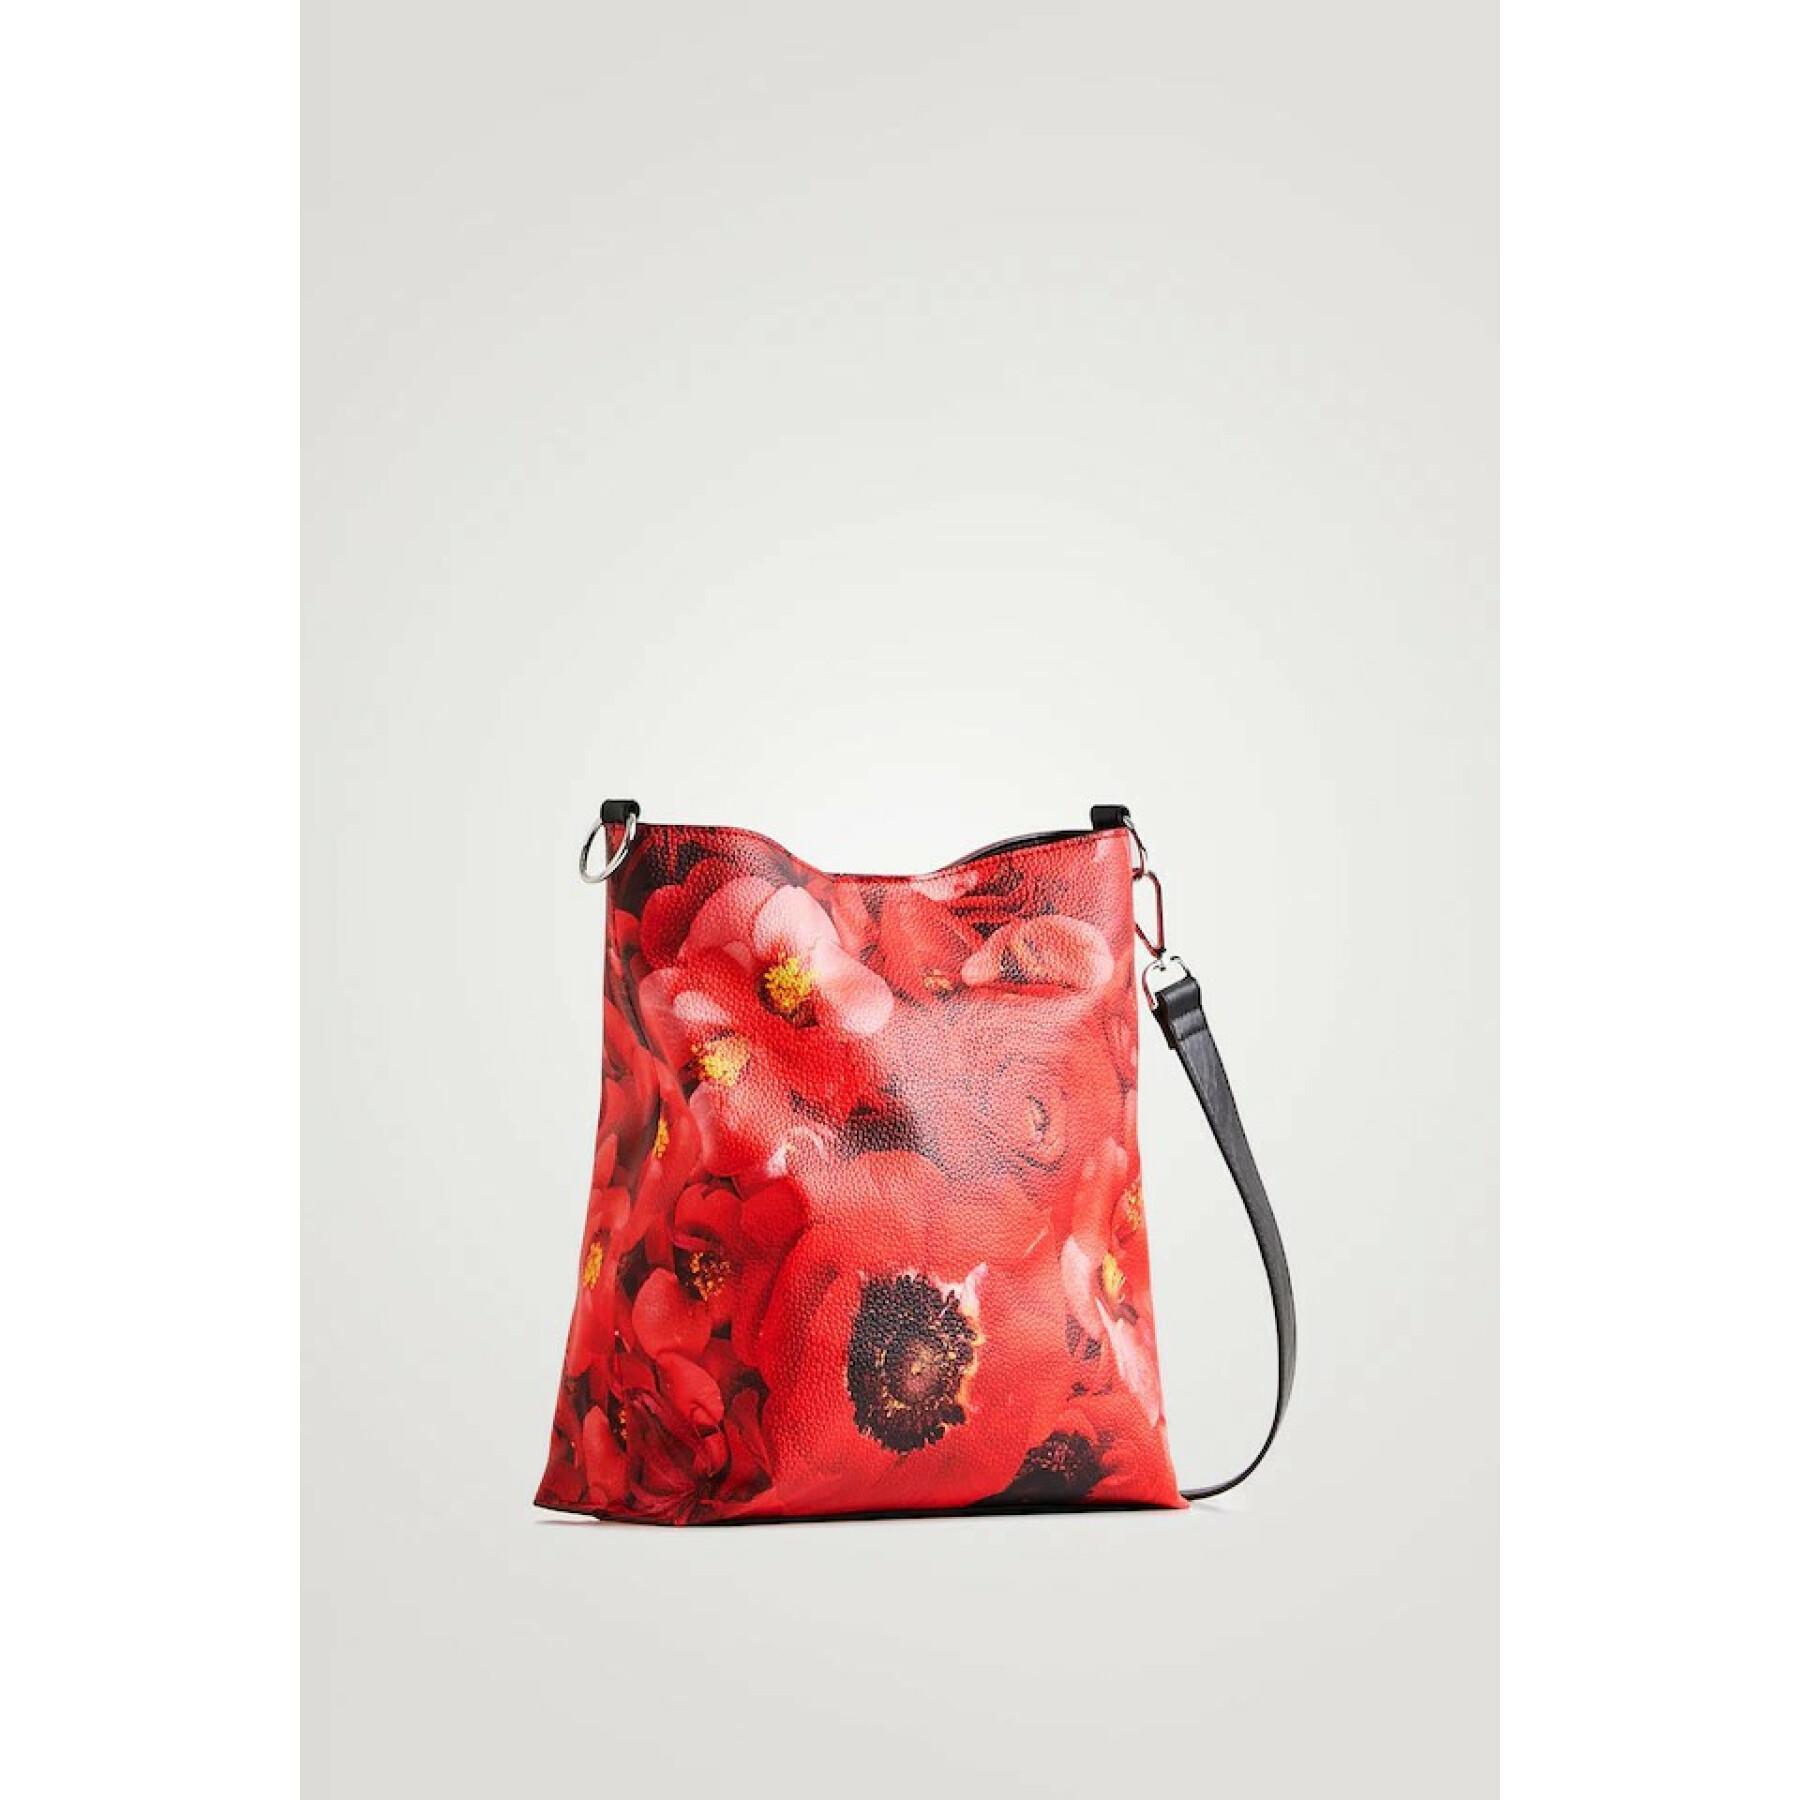 Women's handbag Desigual Imperial Patch Butan